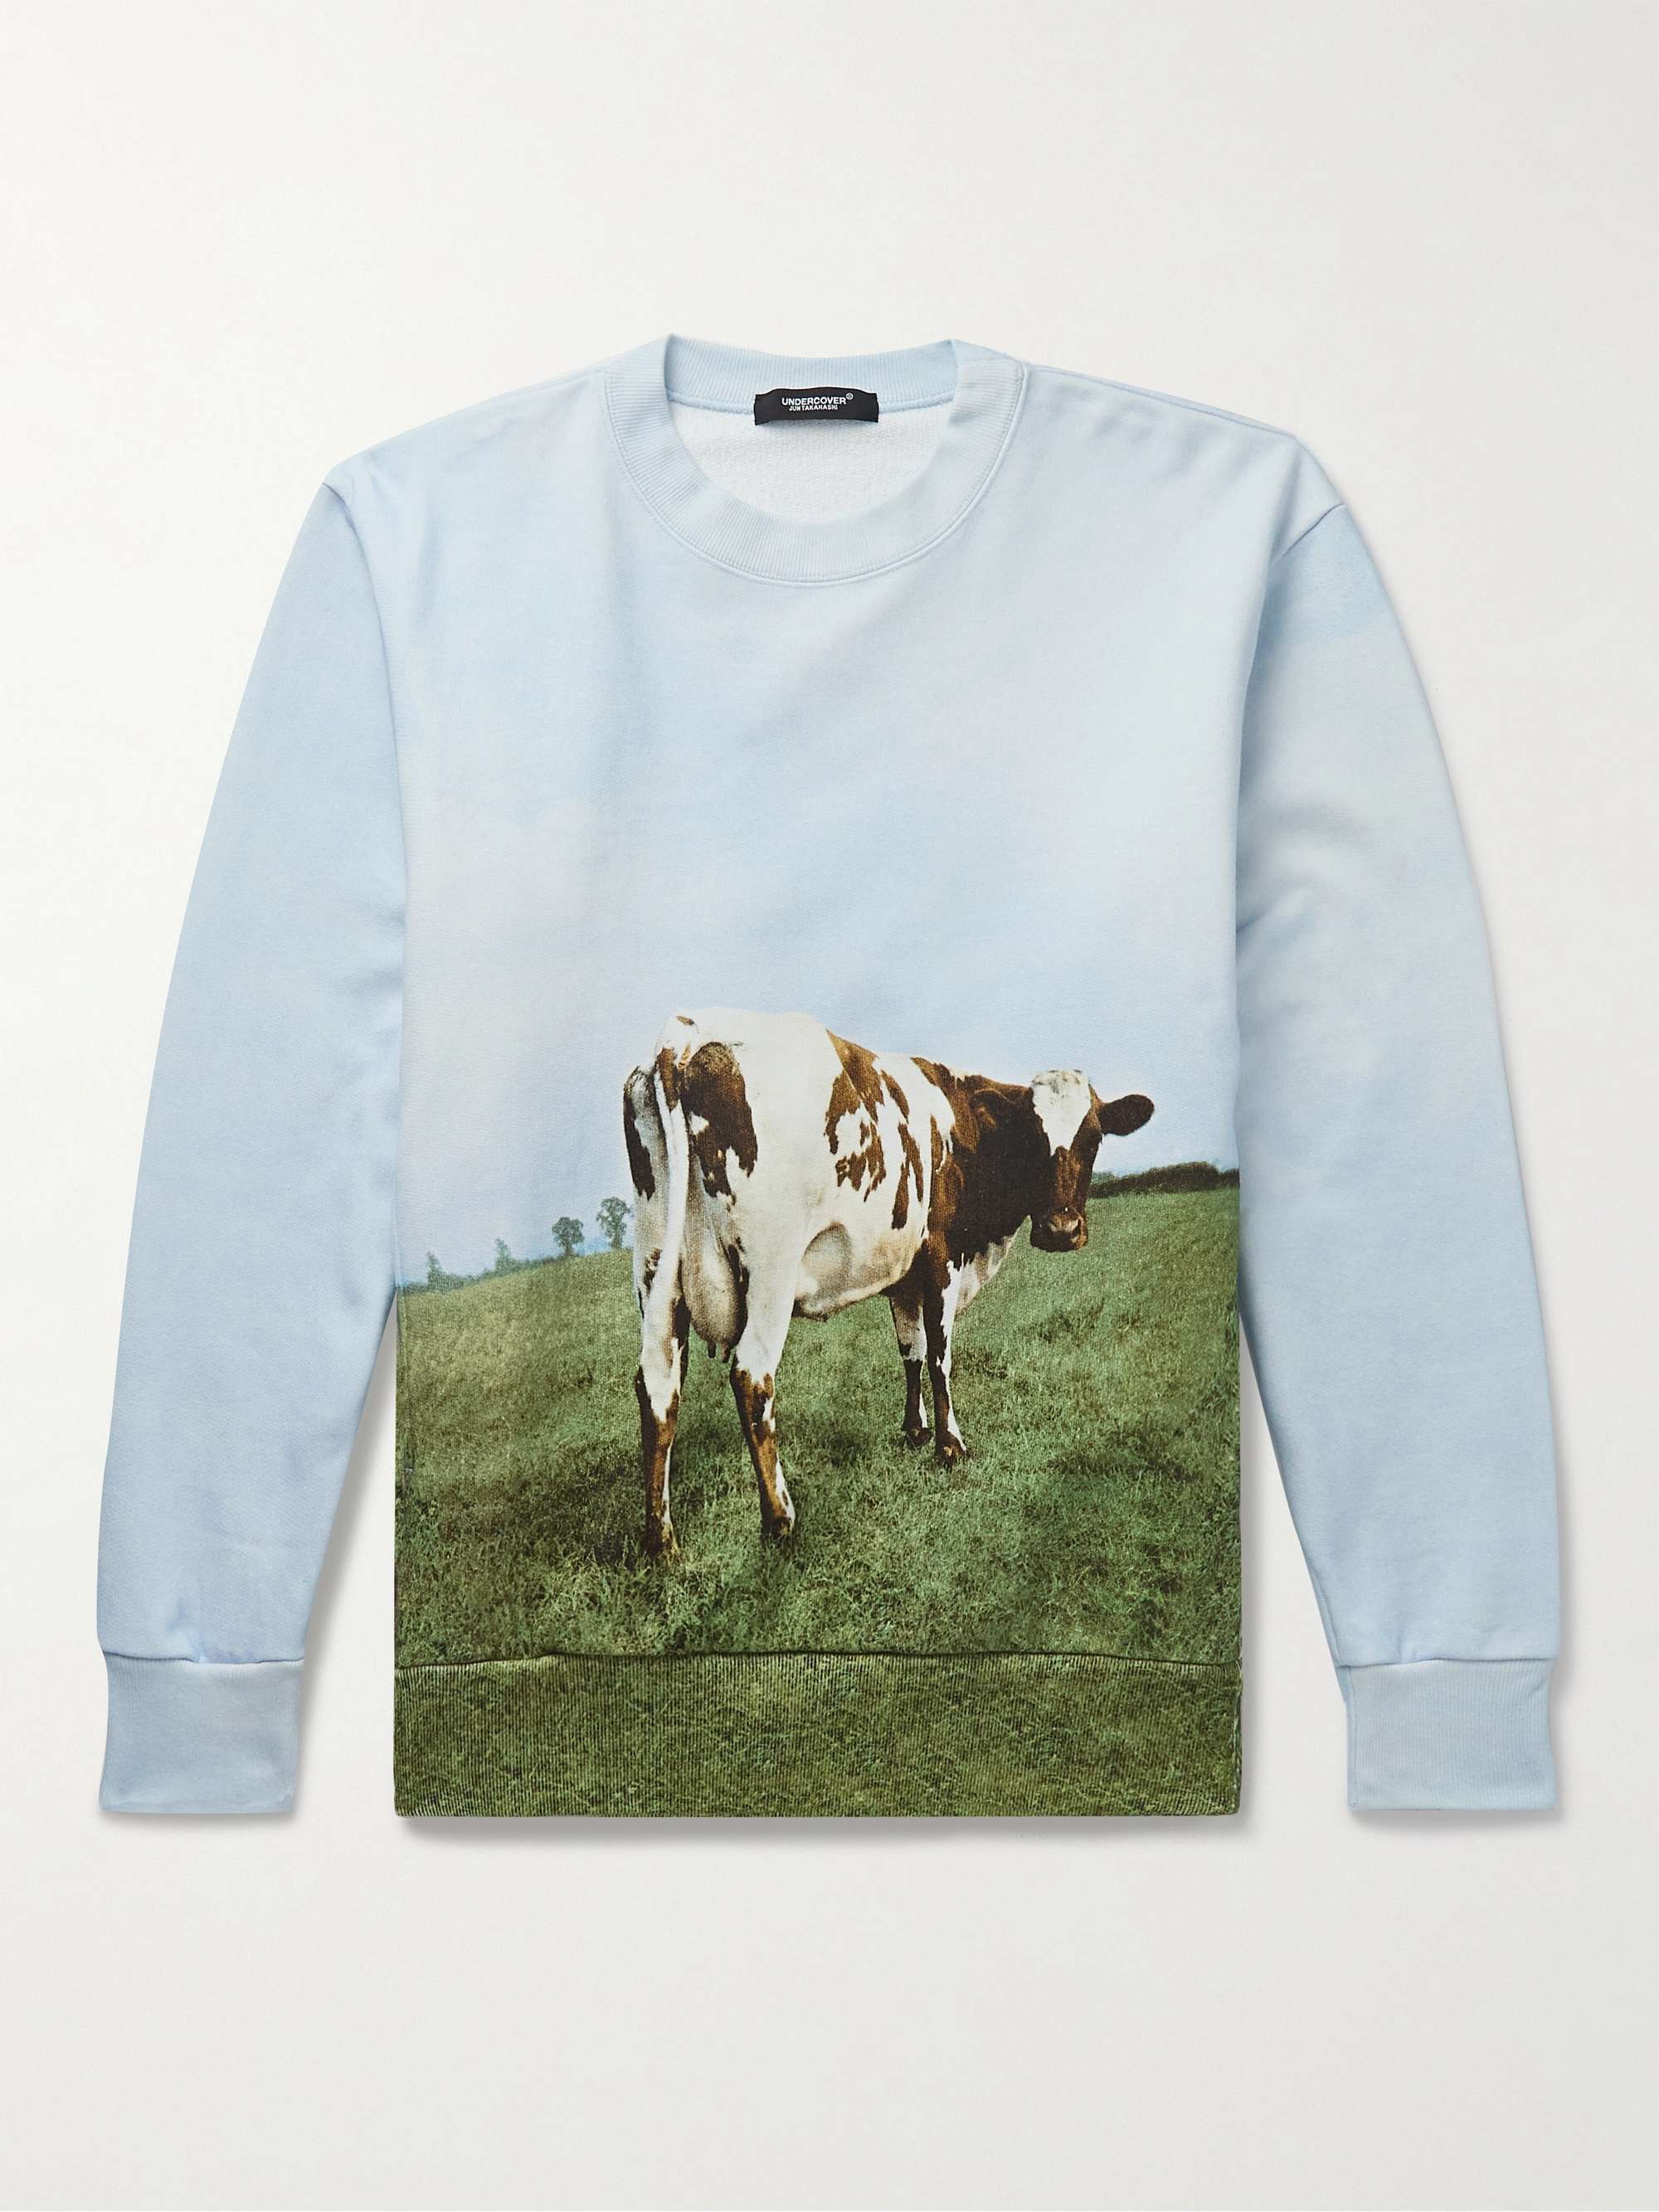 + Pink Floyd Printed Cotton-Jersey Sweatshirt